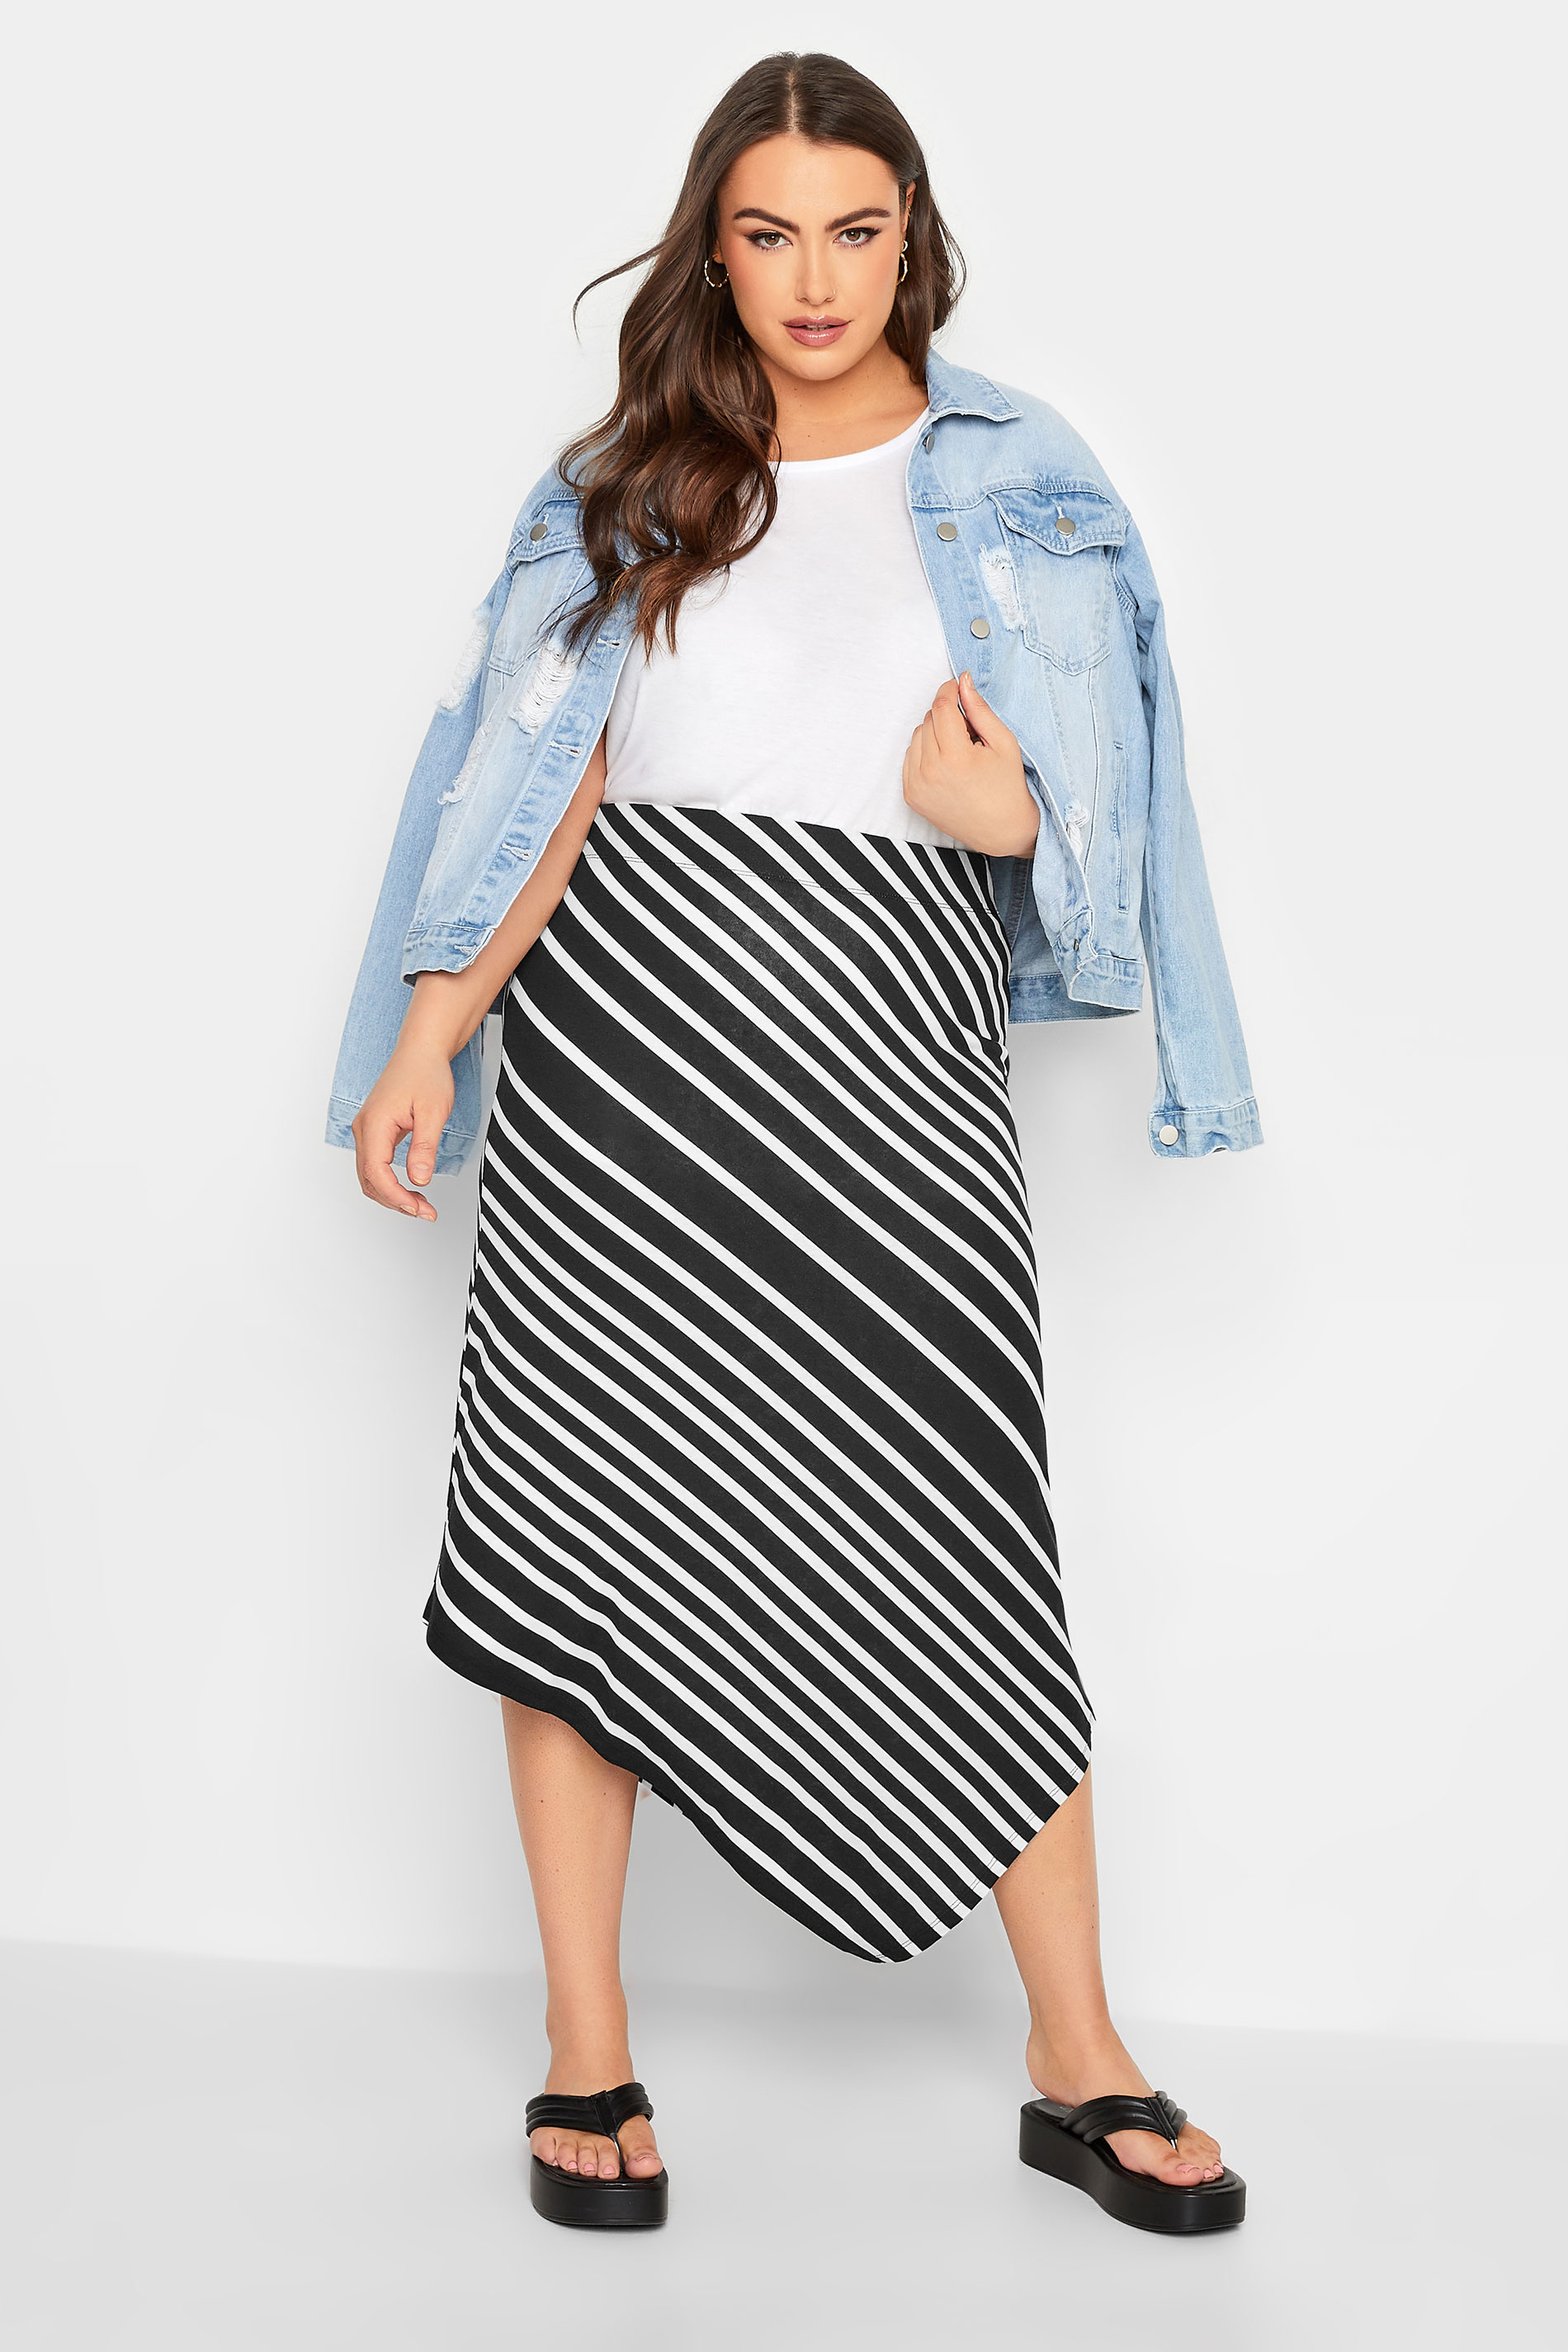 fashion do: plus size stripes - Curvy Girl Chic